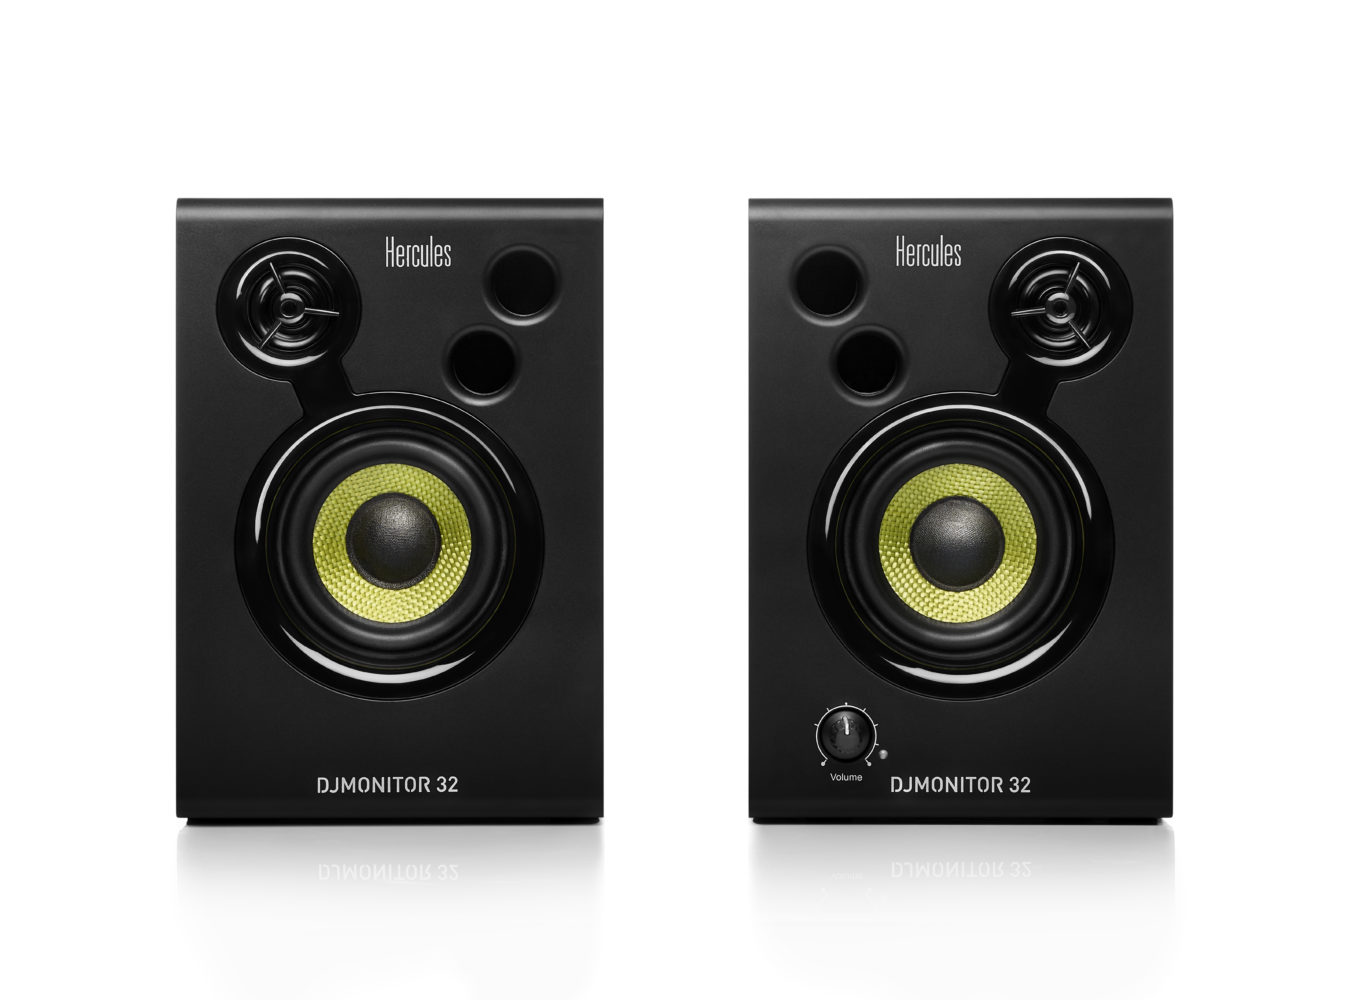 DJMonitor 32 - Listen clear - Hercules - Active monitoring speakers